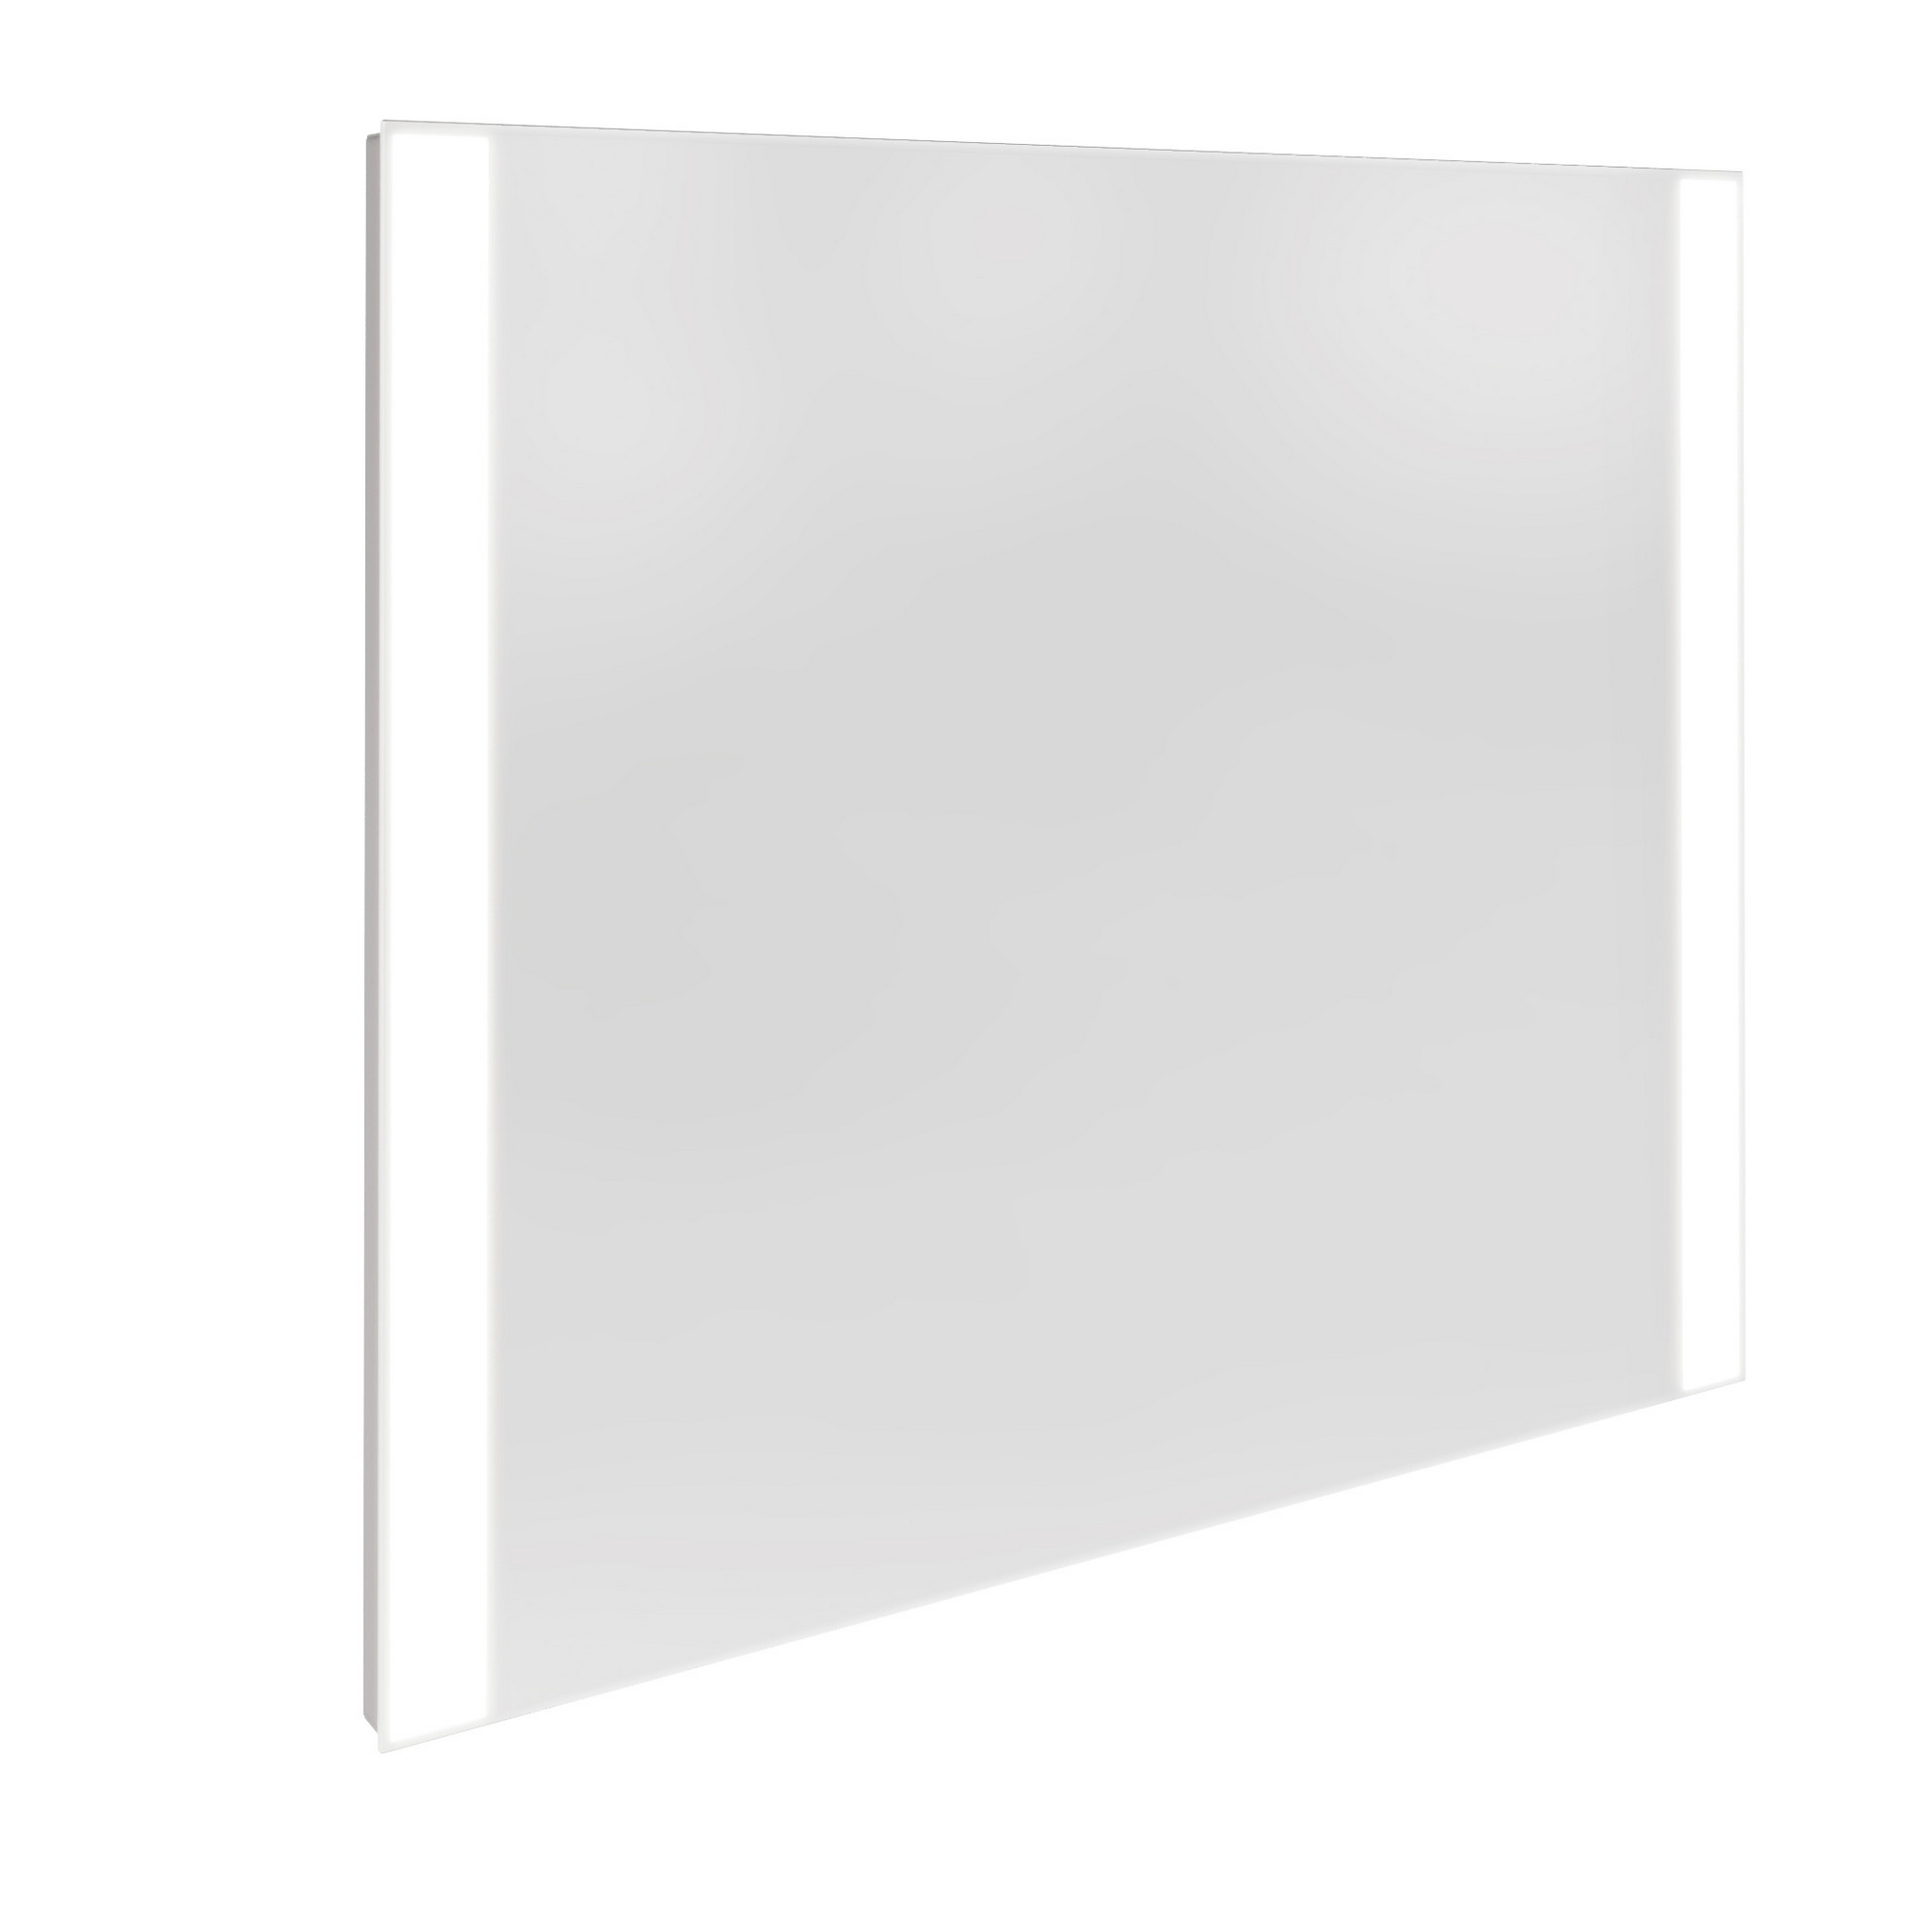 LED-Spiegelelement 'Brillant Light'aluminiumfarben 80 x 68 x 2,4 cm + product picture